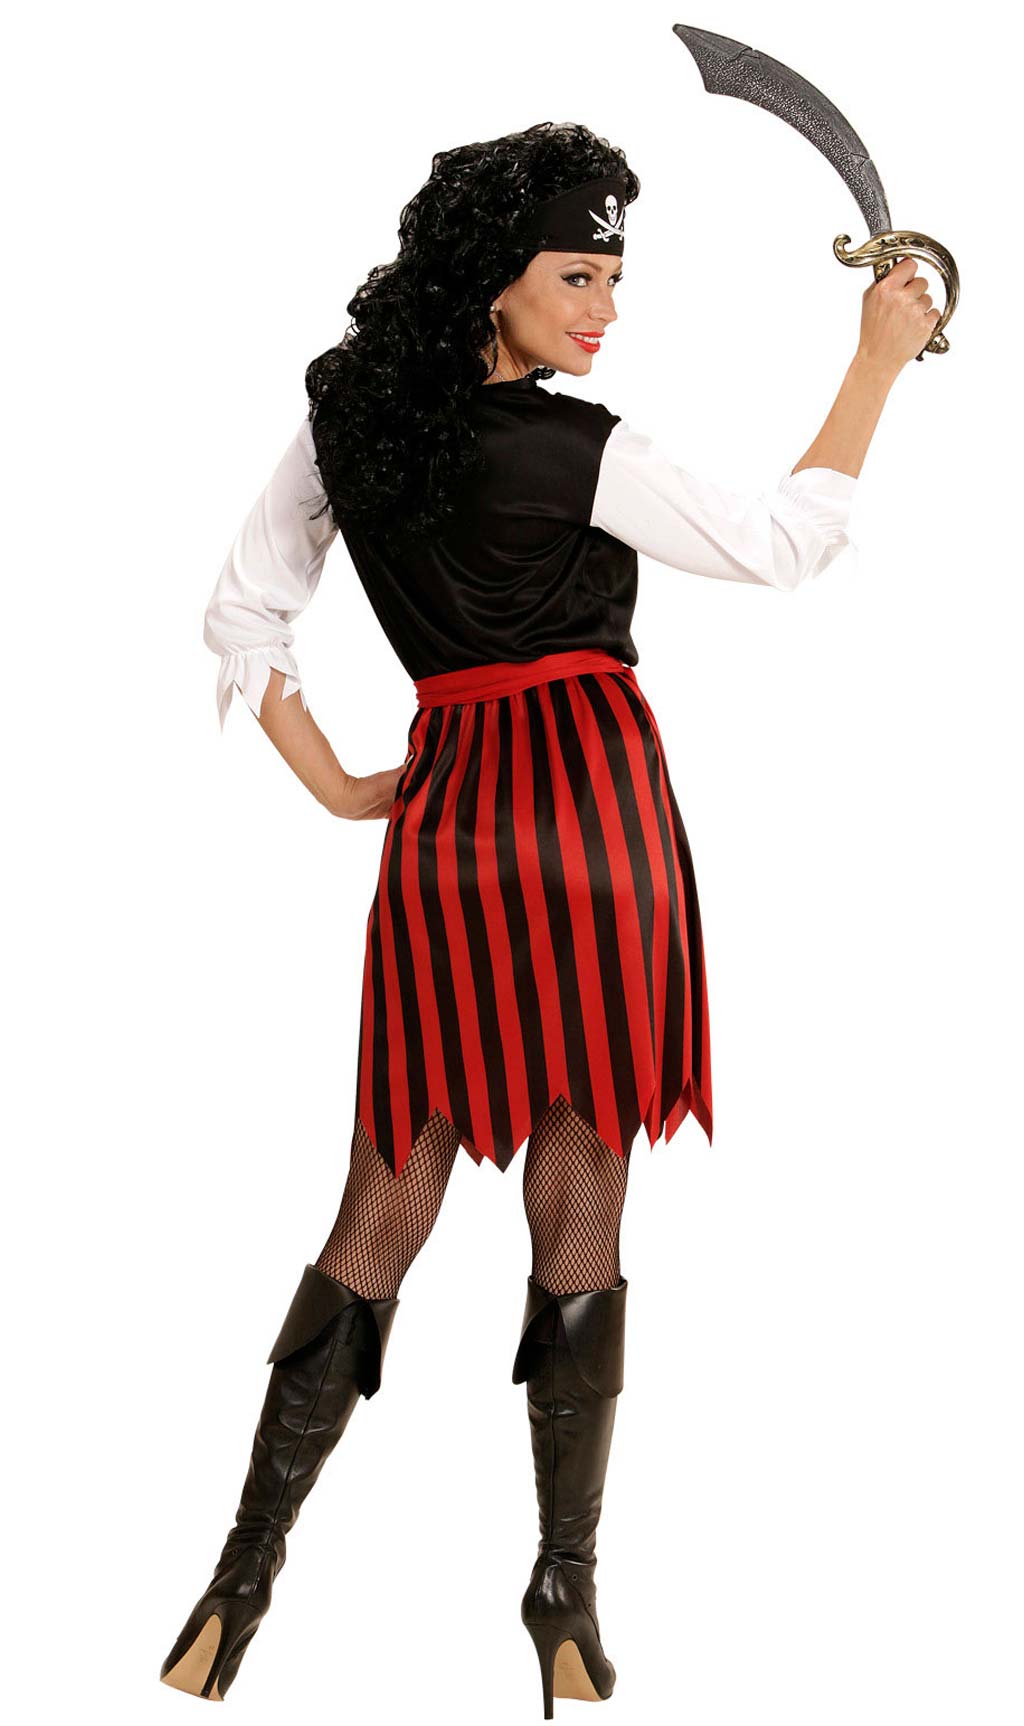 Disfraces de pirata para mujer - Disfraz de pirata de mujer para Halloween